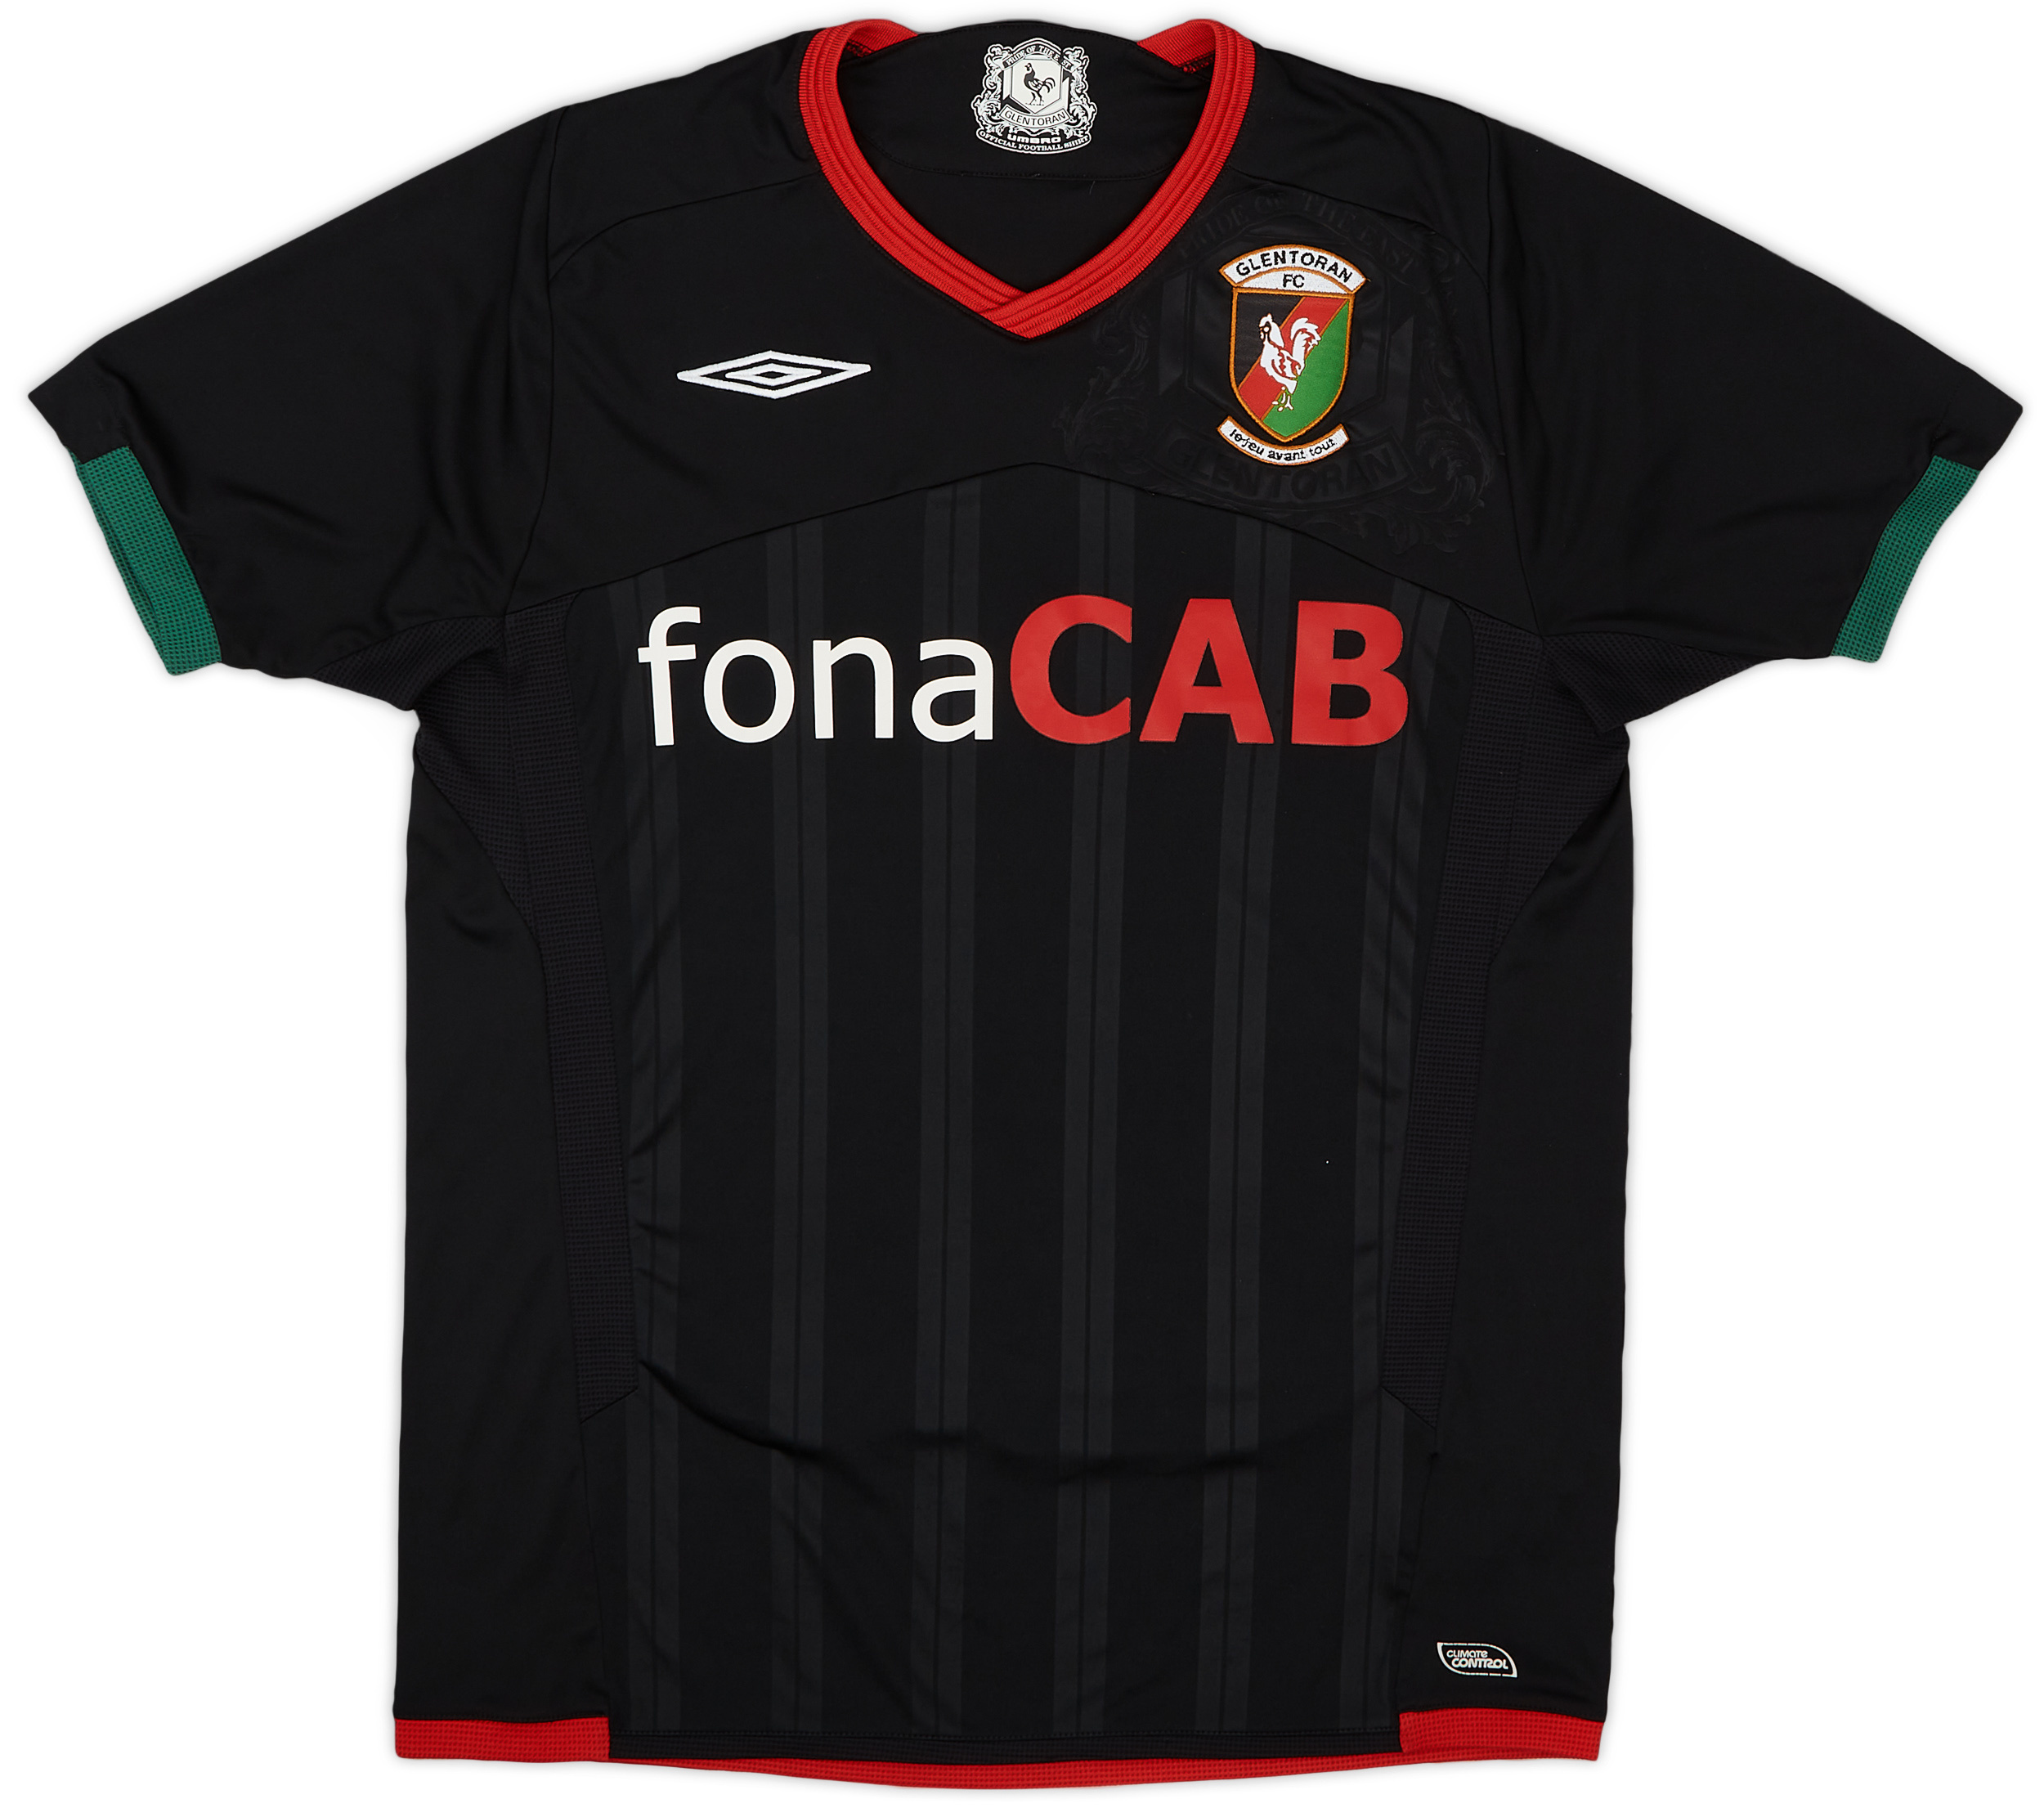 2009-10 Glentoran FC Away Shirt - 9/10 - ()